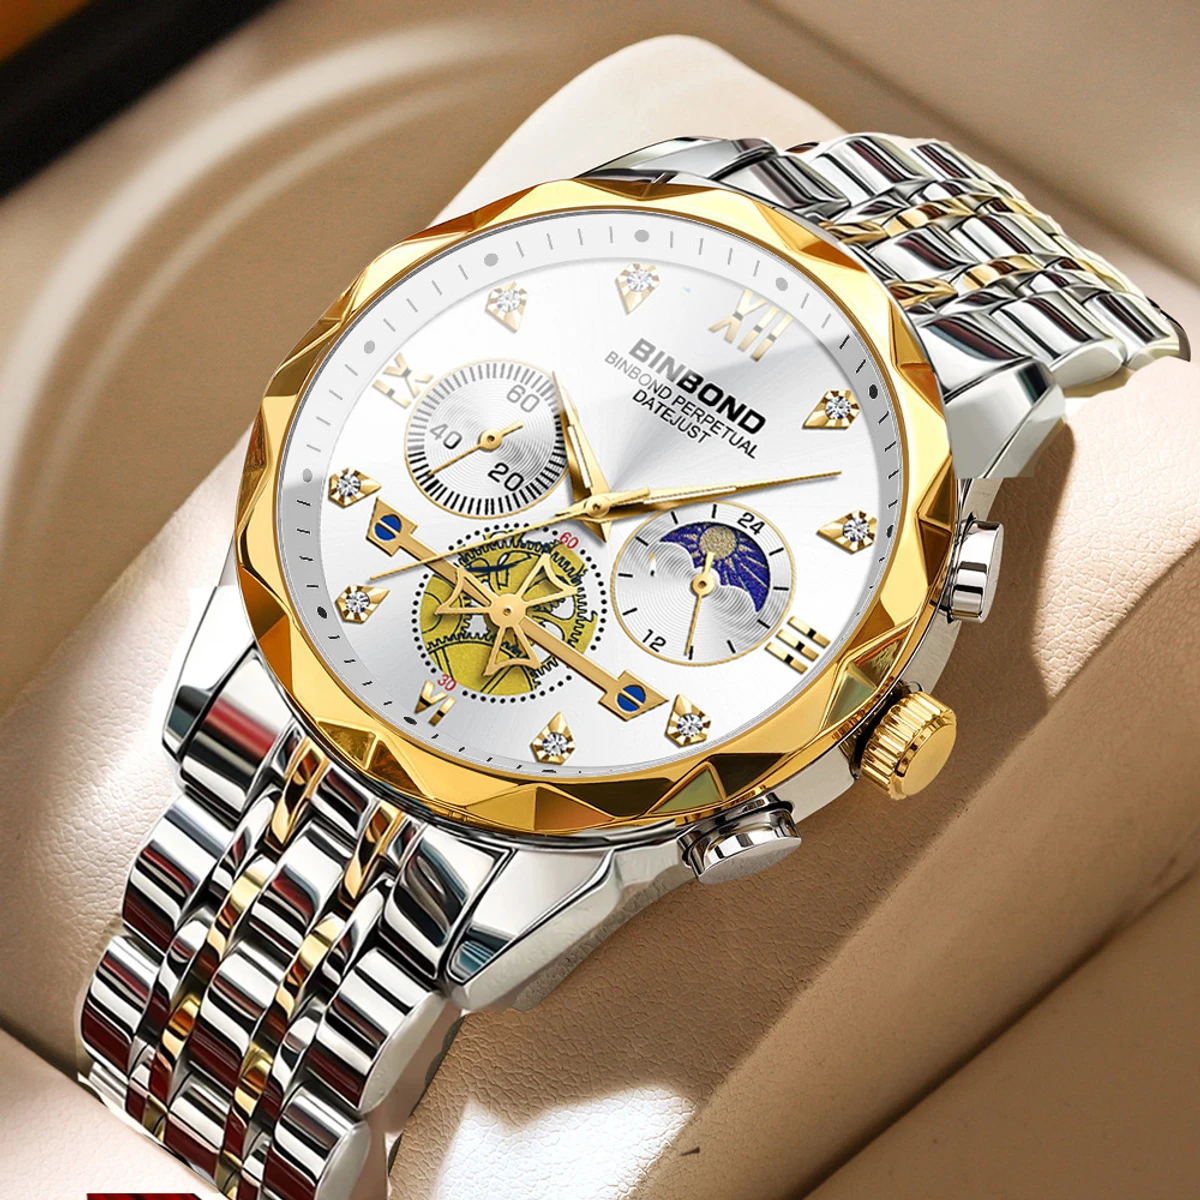 New Luxury Watch For Men Stainless Steel Waterproof Business Sport Wristwatches- Silver